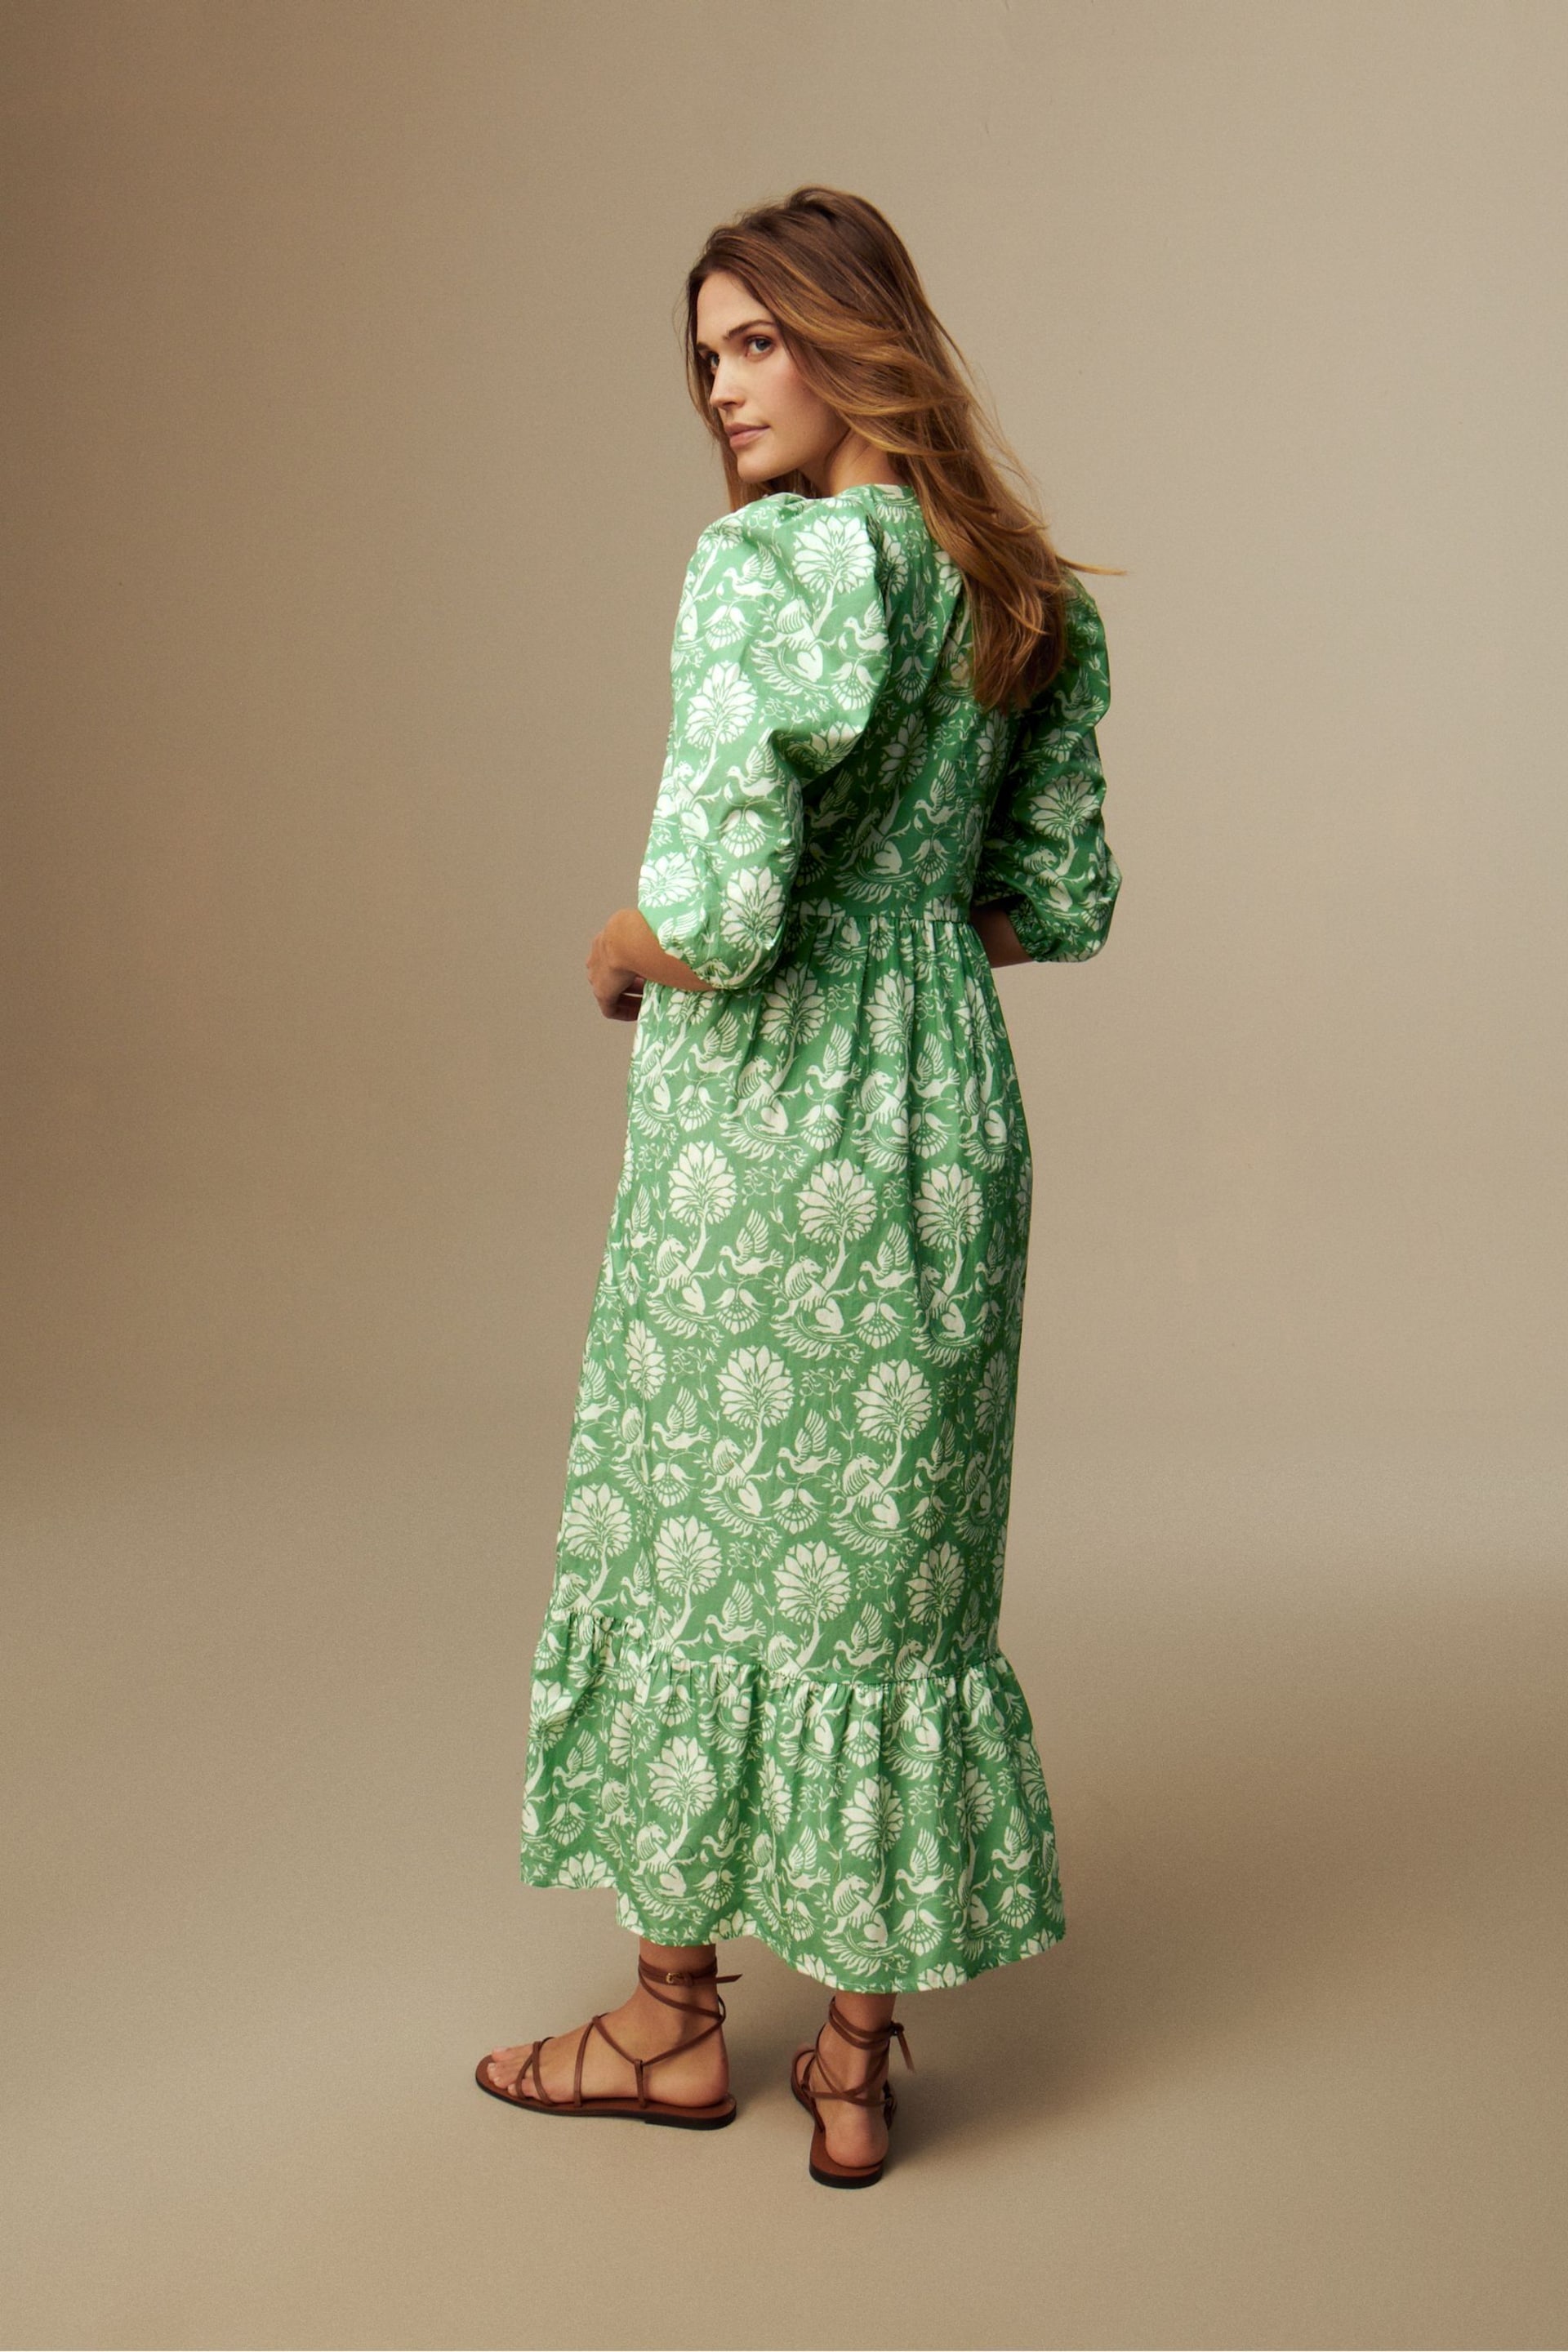 Laura Ashley Green Camelot Print Green Midaxi Dress - Image 3 of 4